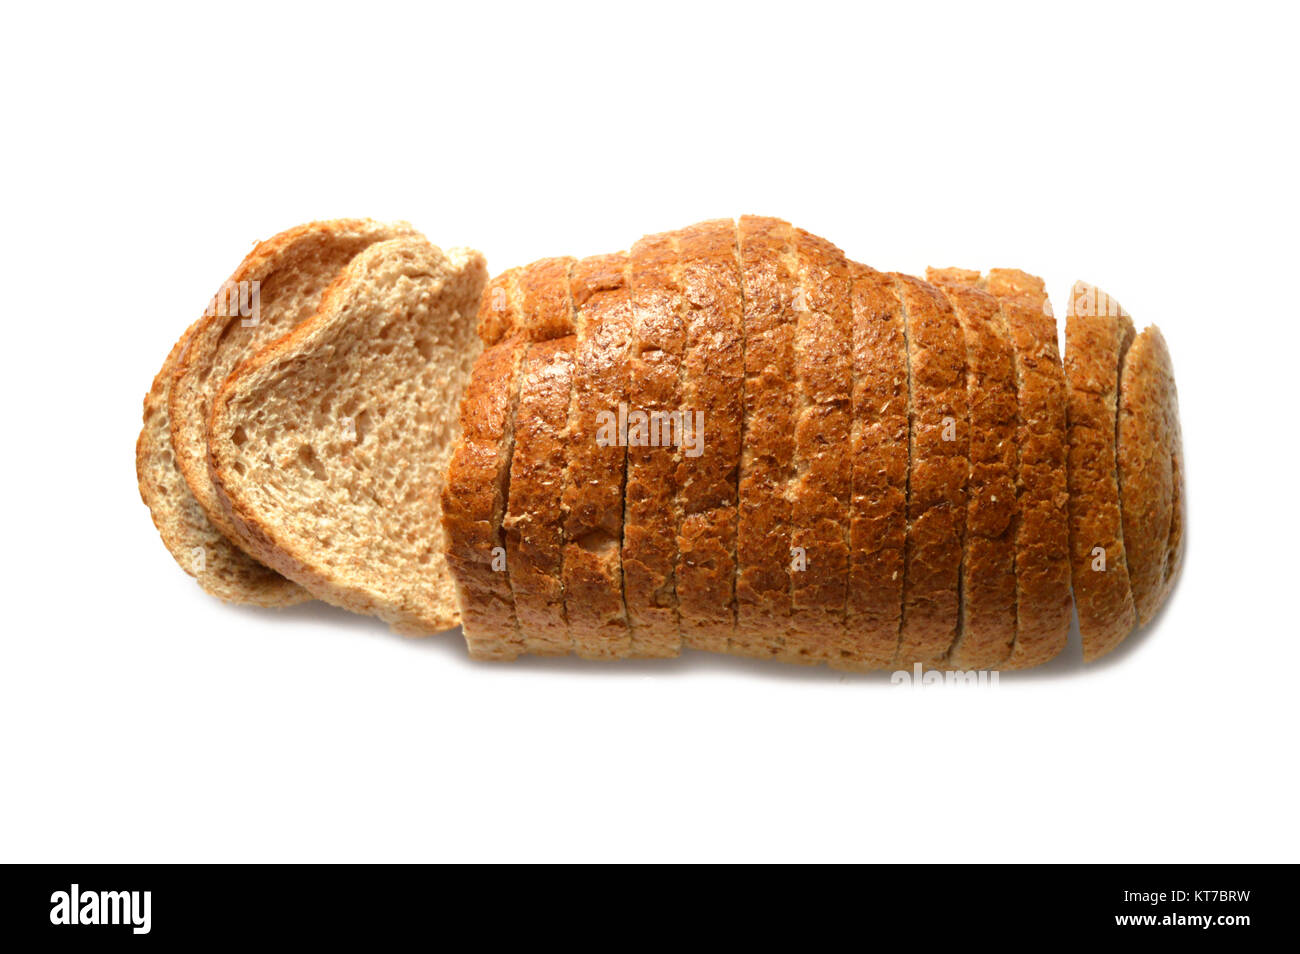 Bran bread for health, bran bread pictures, sliced bran breads, bran bread for patients Stock Photo